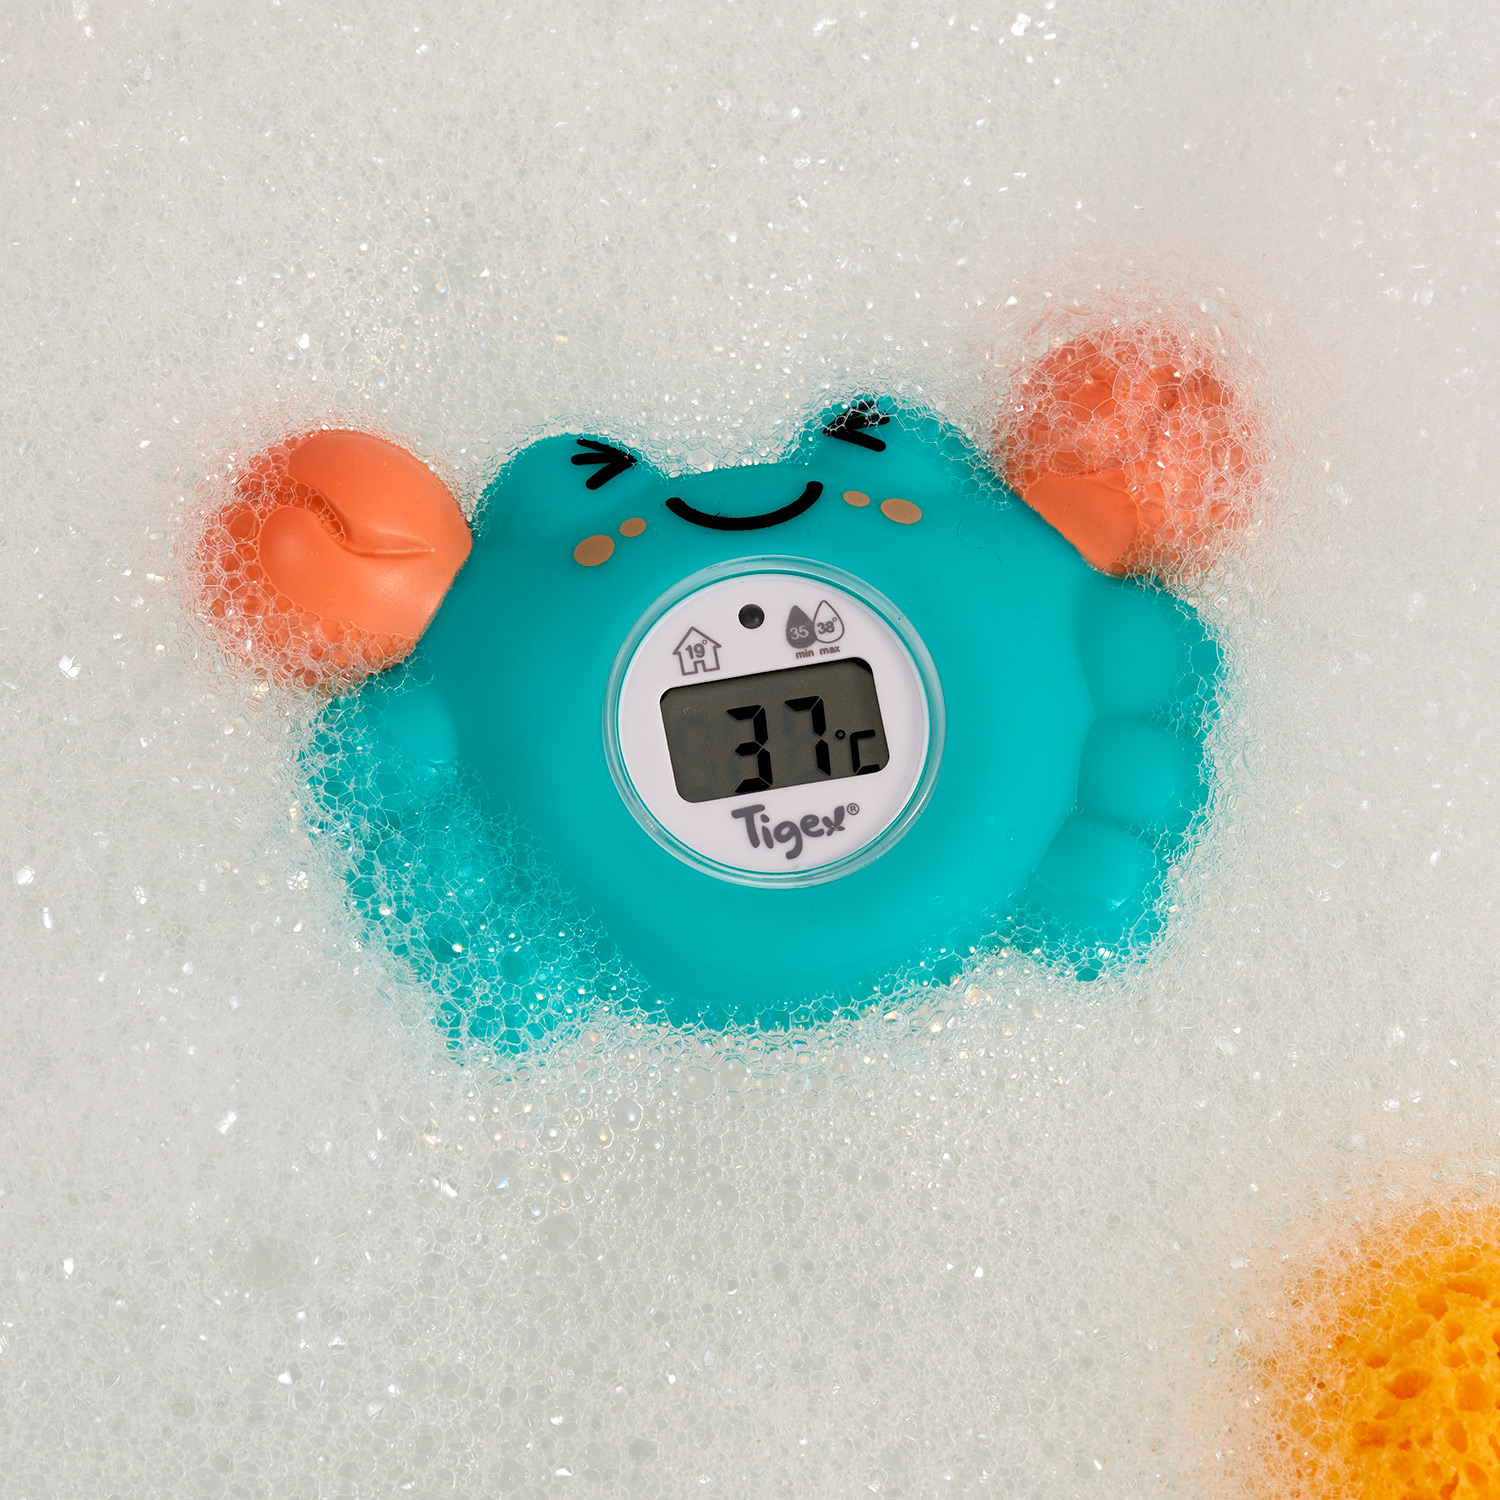 Thermometre Bain, Thermomètre Bebe bain Intérieur Digital, Jouet